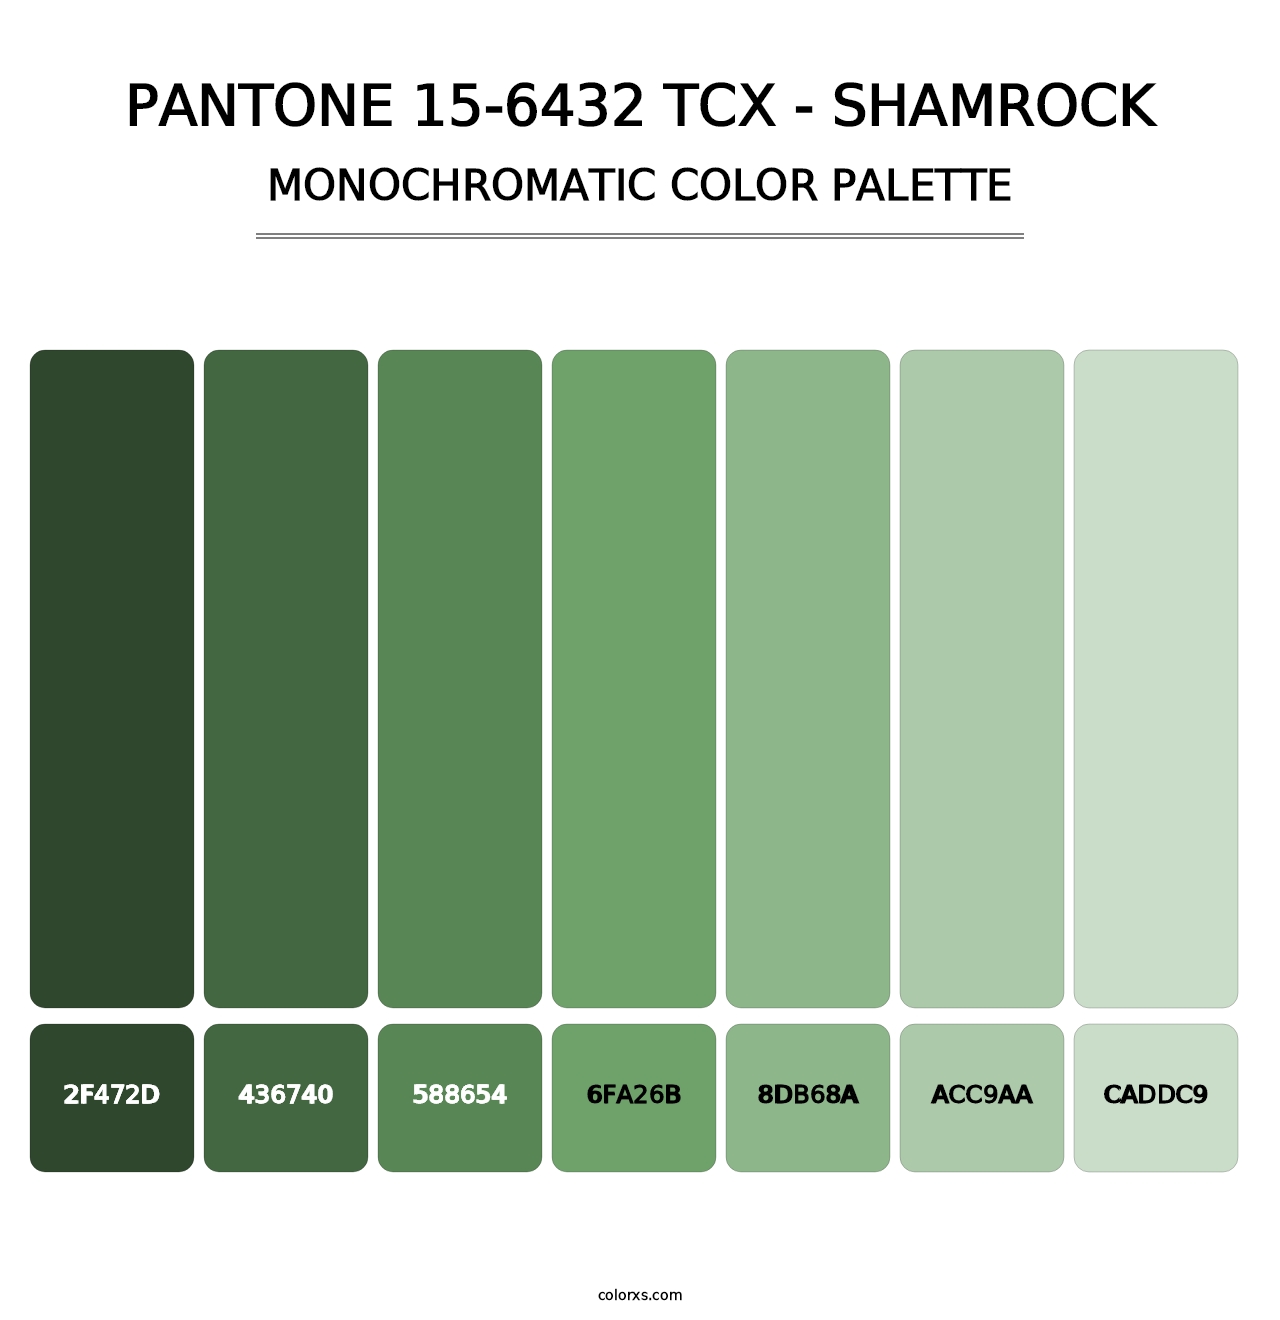 PANTONE 15-6432 TCX - Shamrock - Monochromatic Color Palette